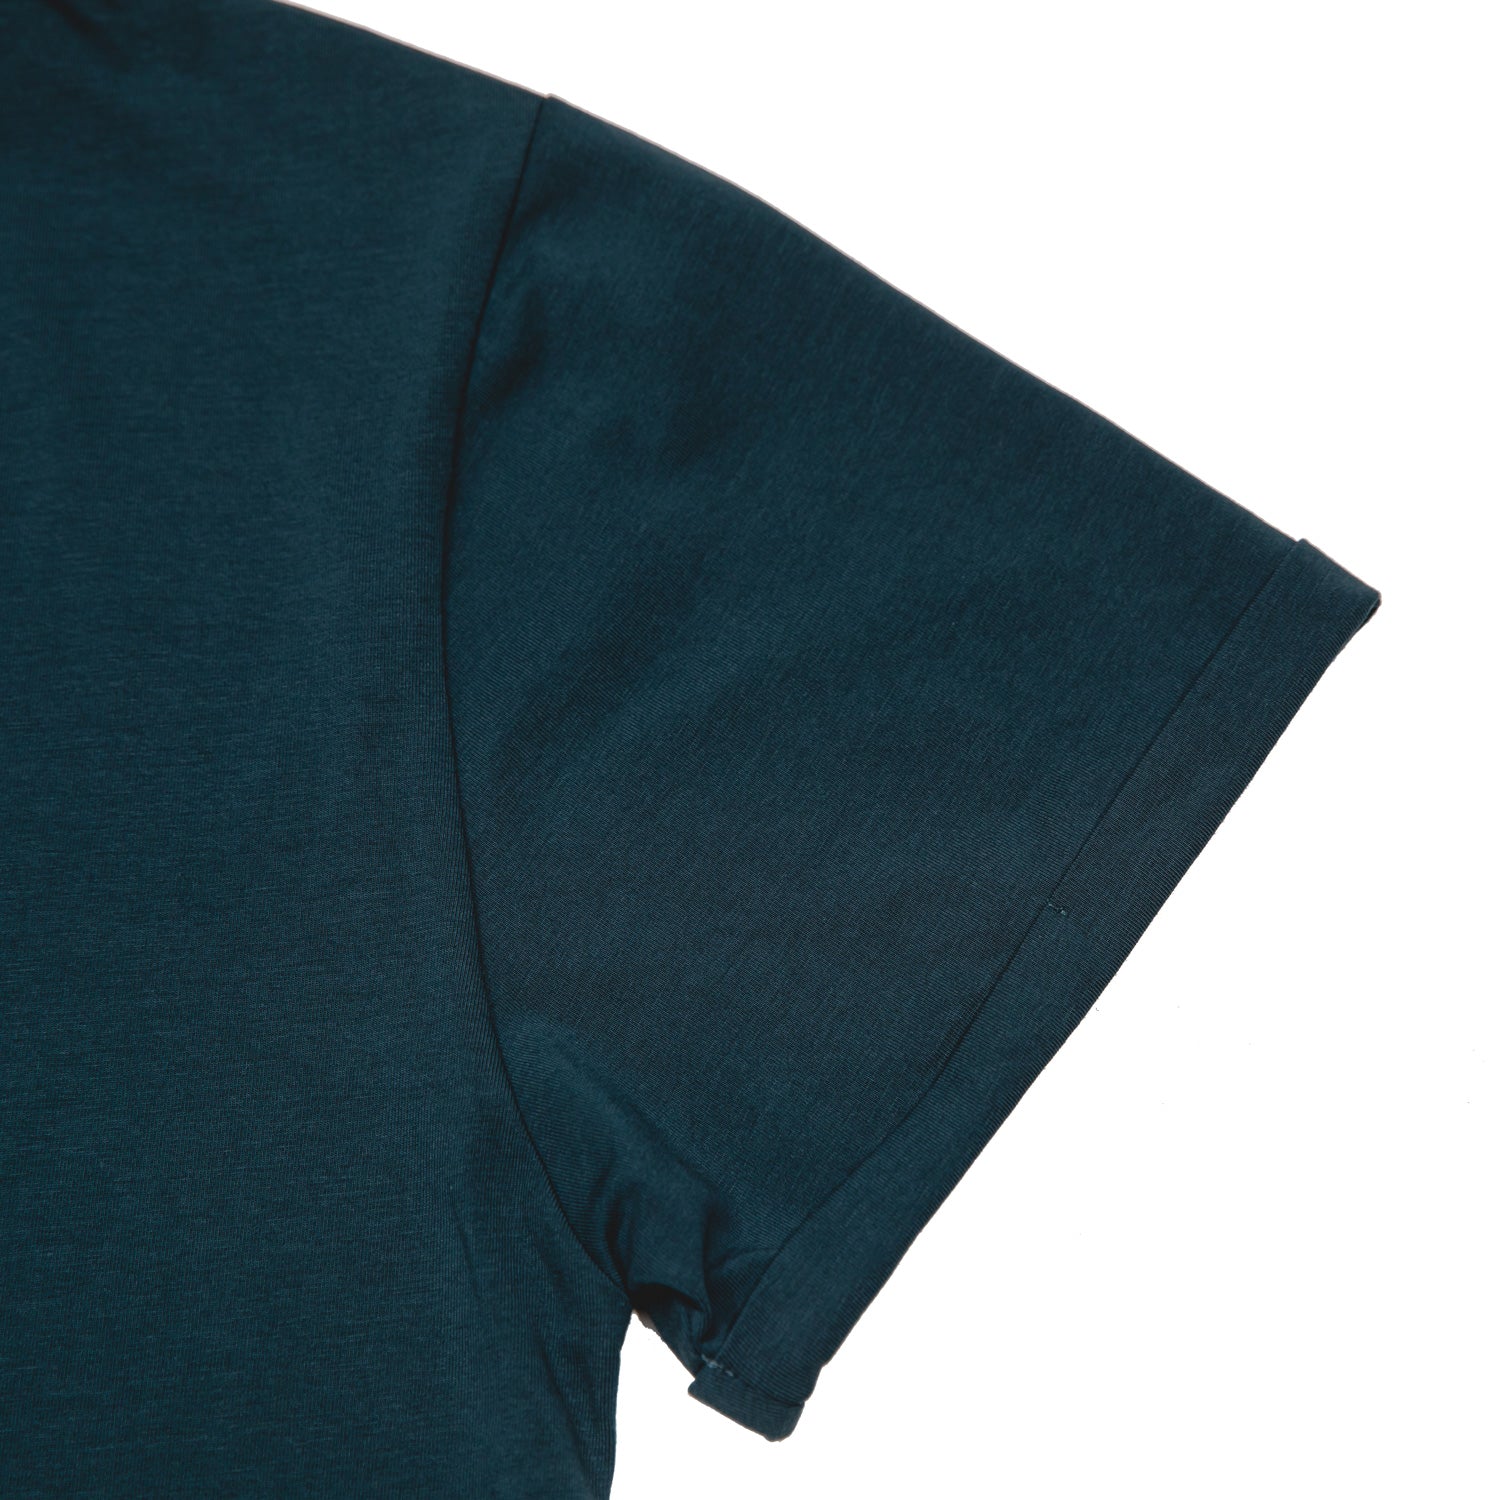 Blue Aegean, T-shirt, shirt, man, plane tee, soft cotton, sleek, detail view, sleeve